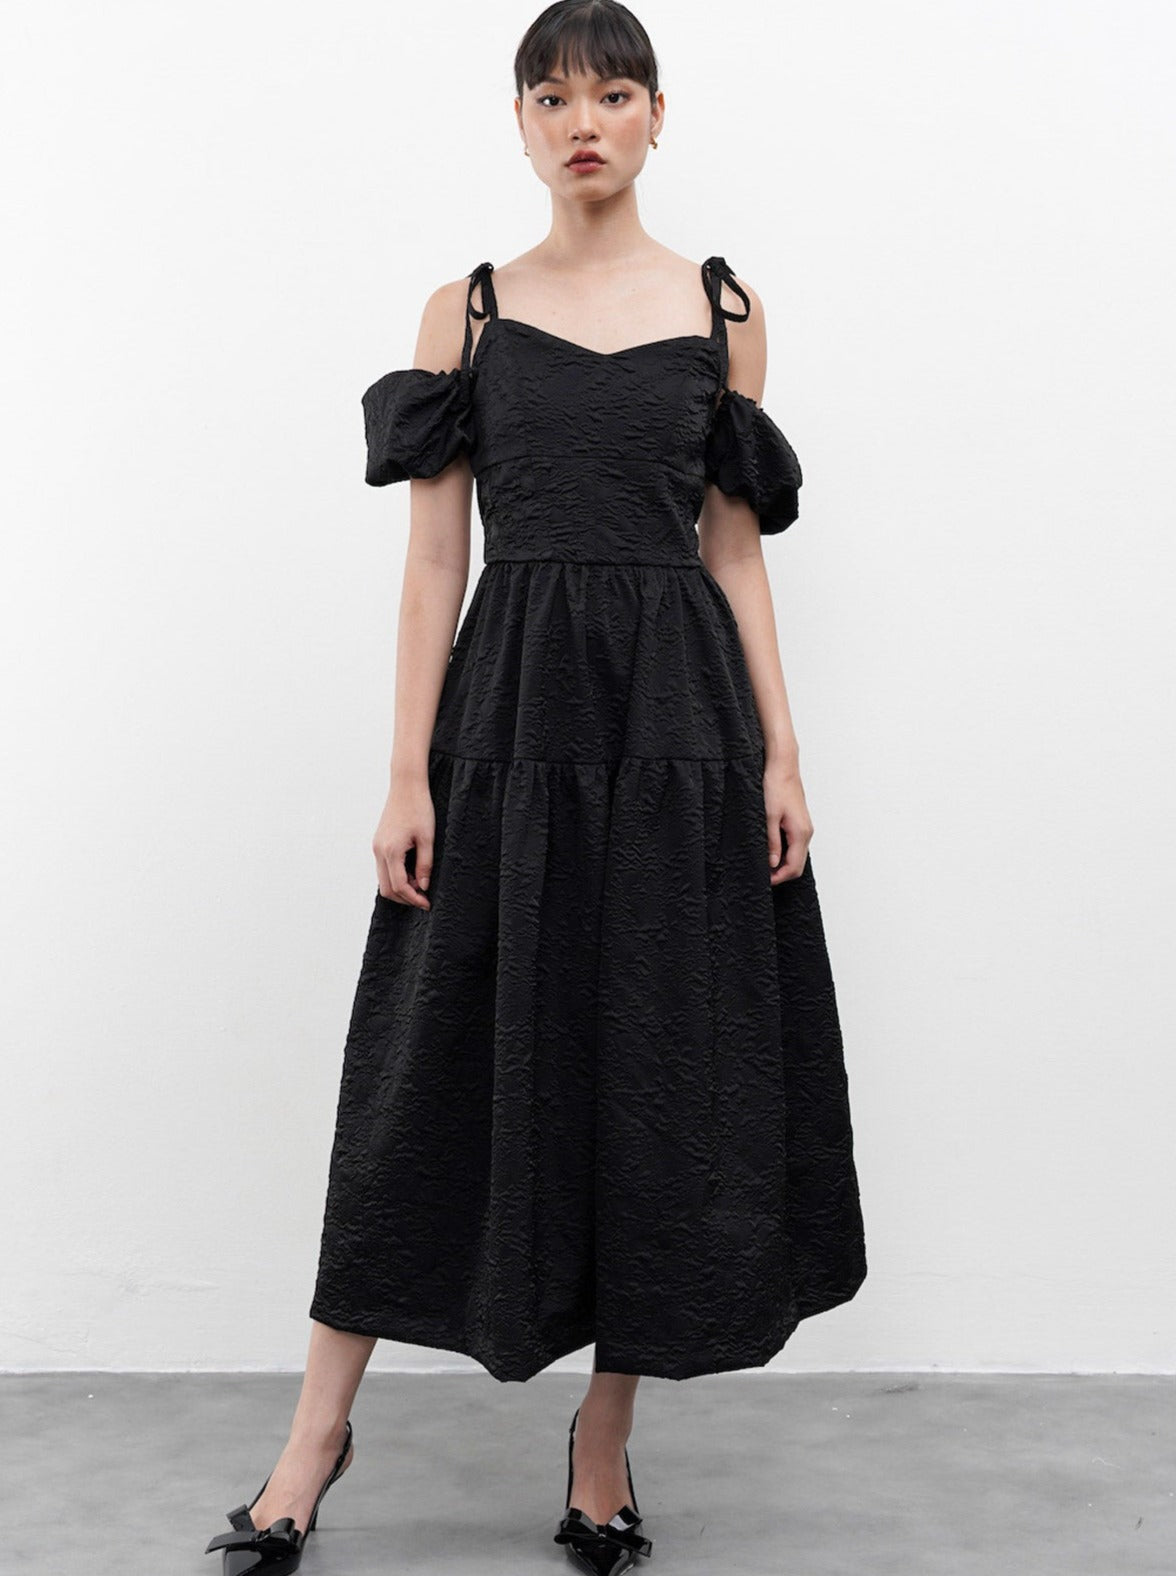 Messalina Dress in Black (3 LEFT)